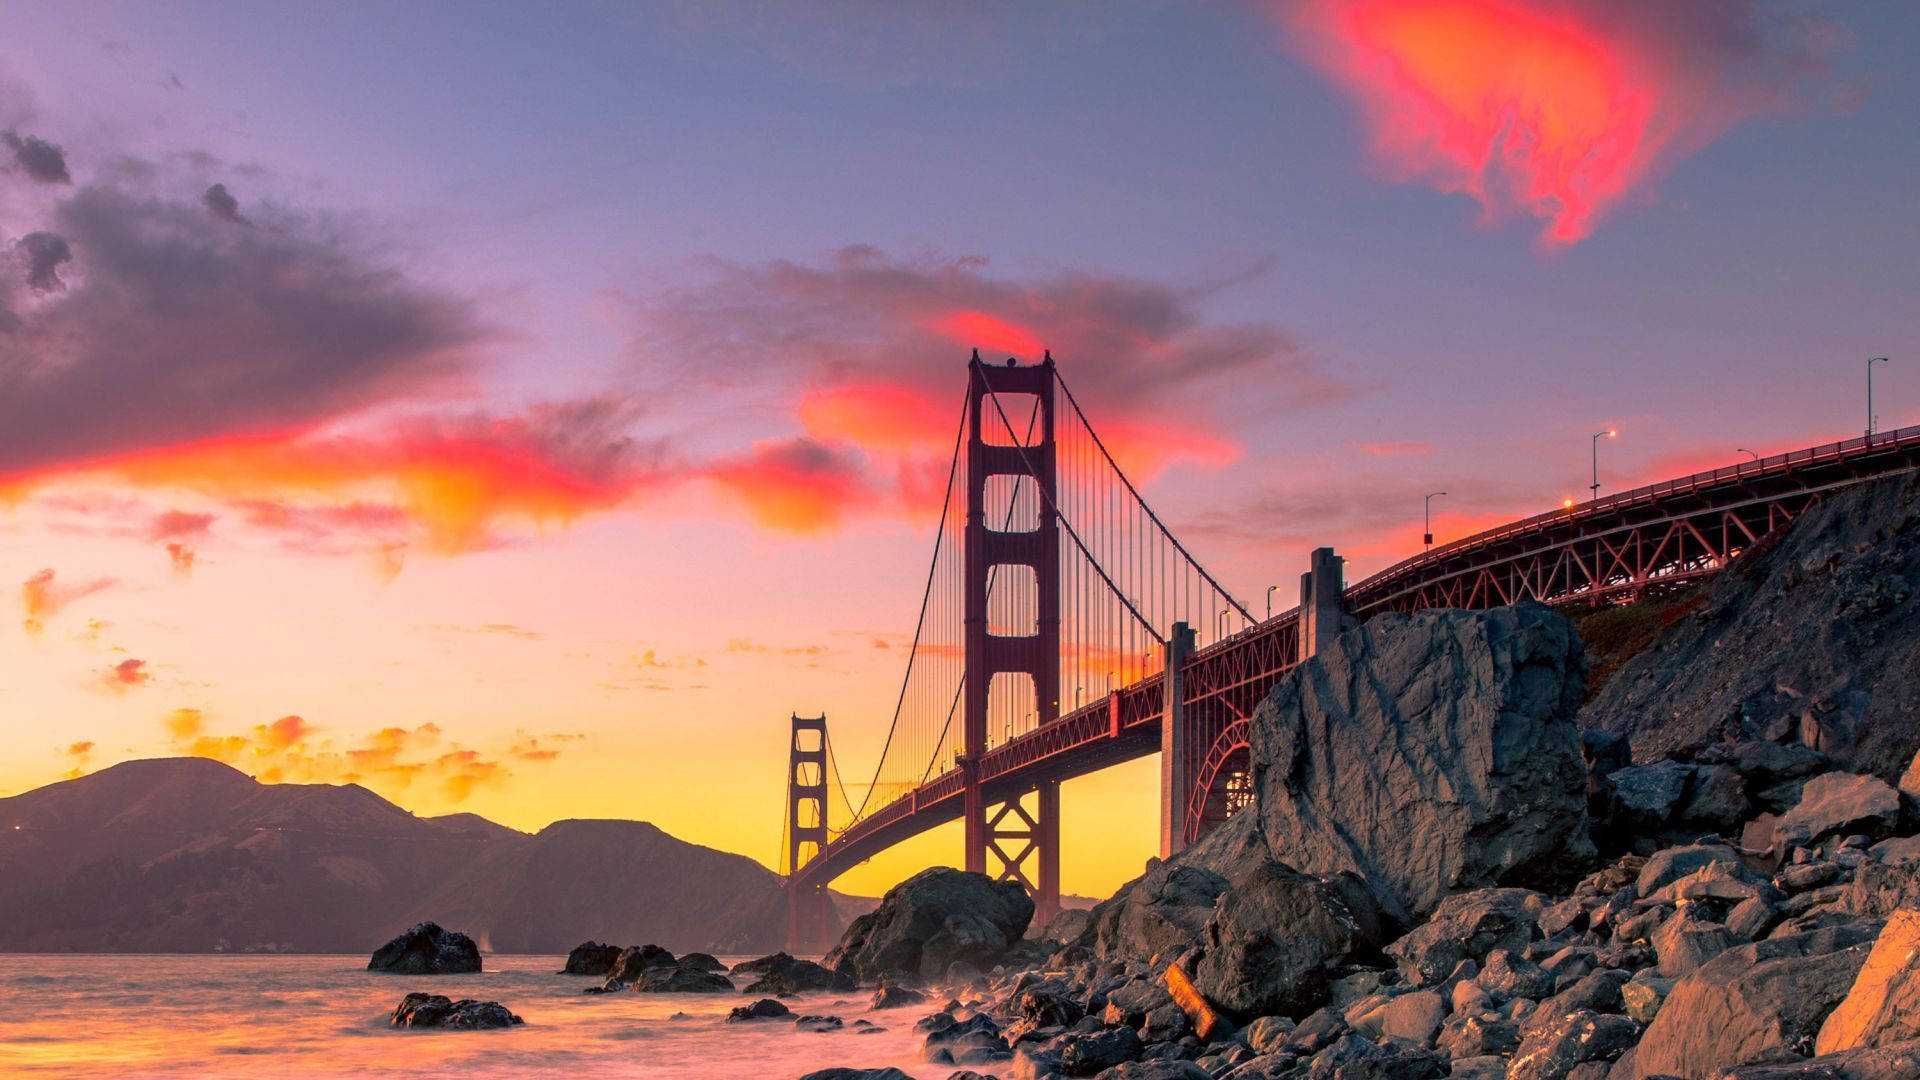 The Golden Gate Bridge in San Francisco, USA Wallpaper